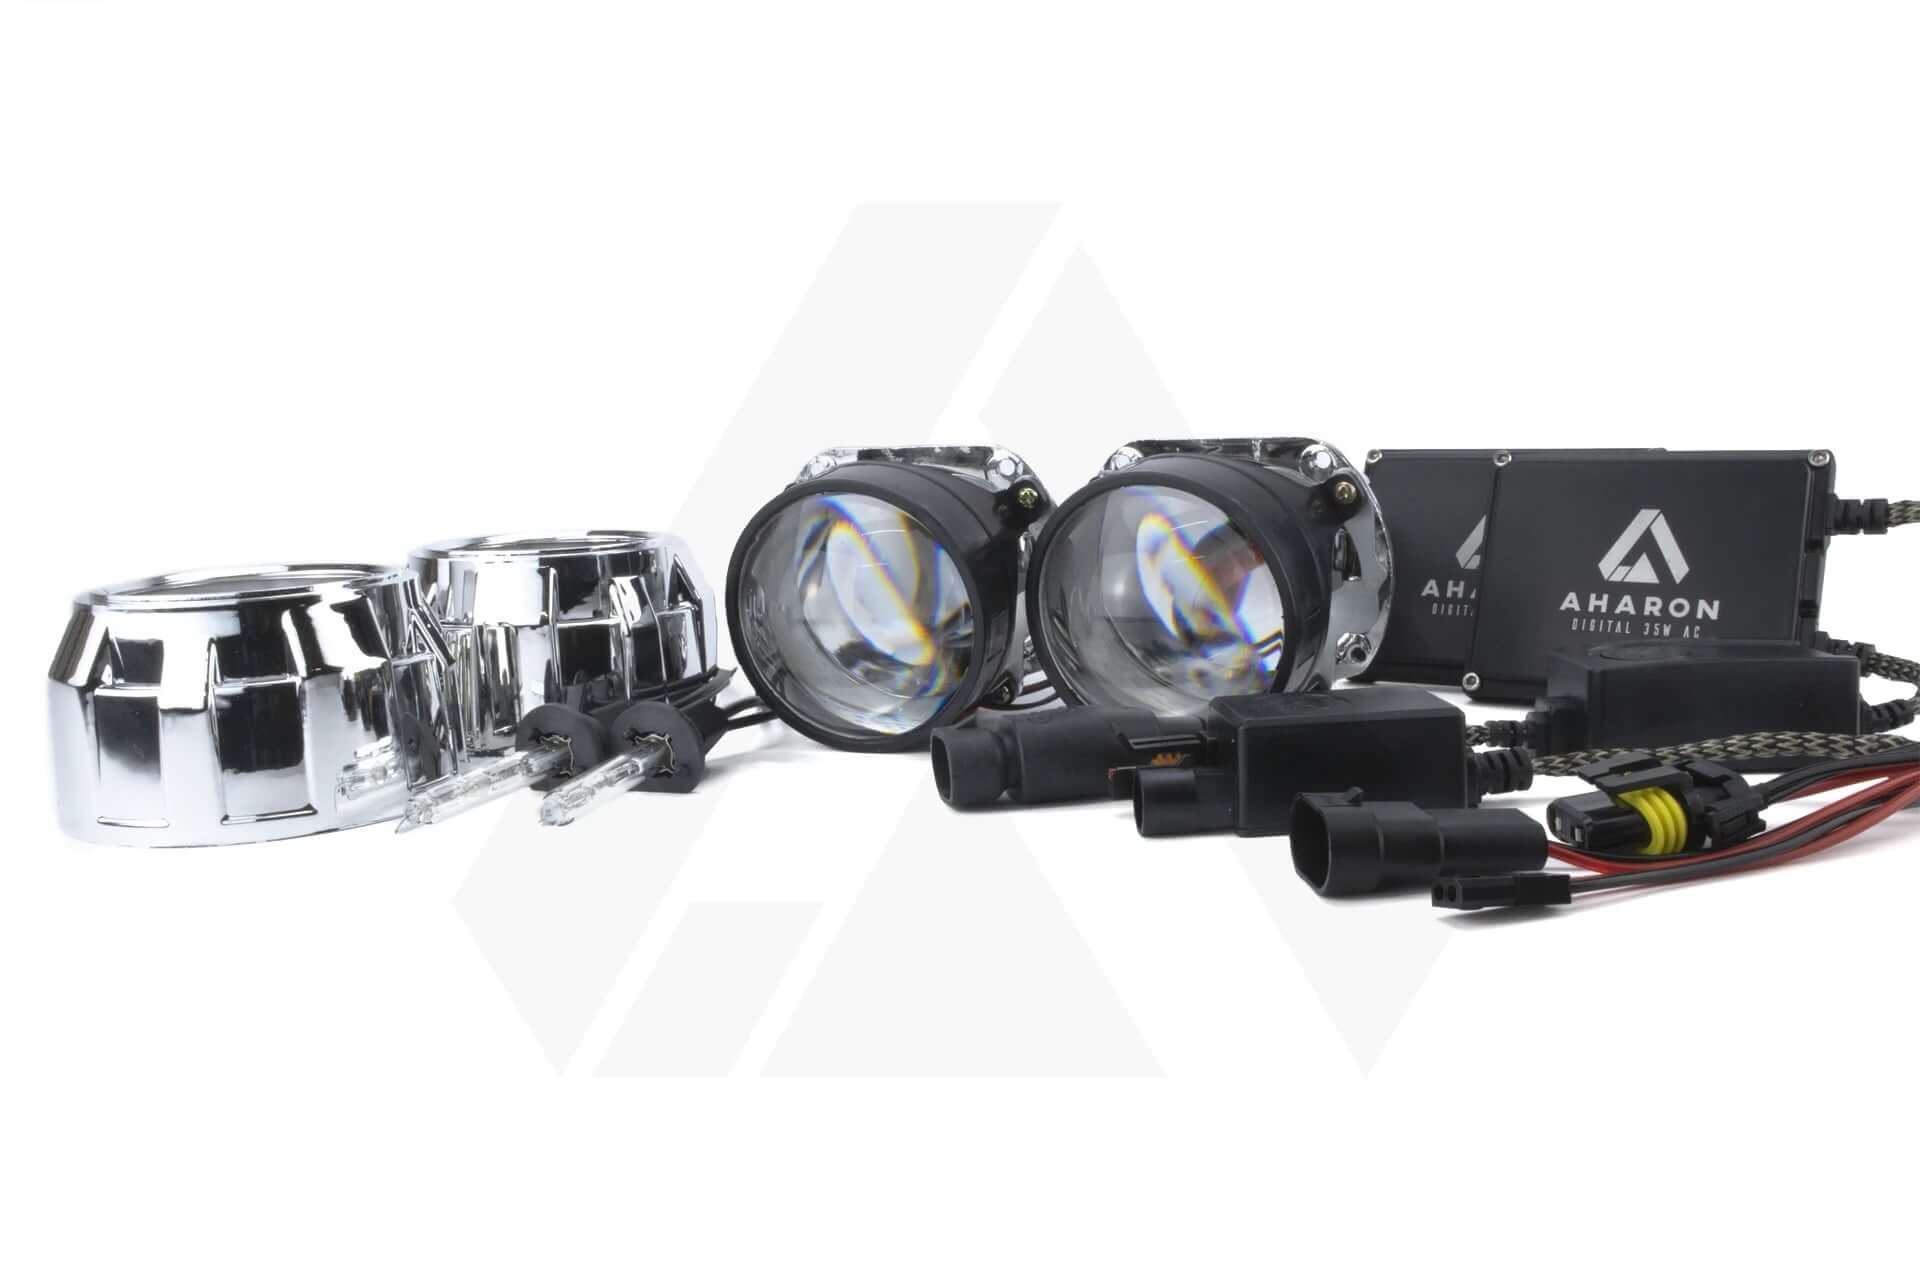 H7 HID Xenon Headlight Conversion Kit - LED Light Street